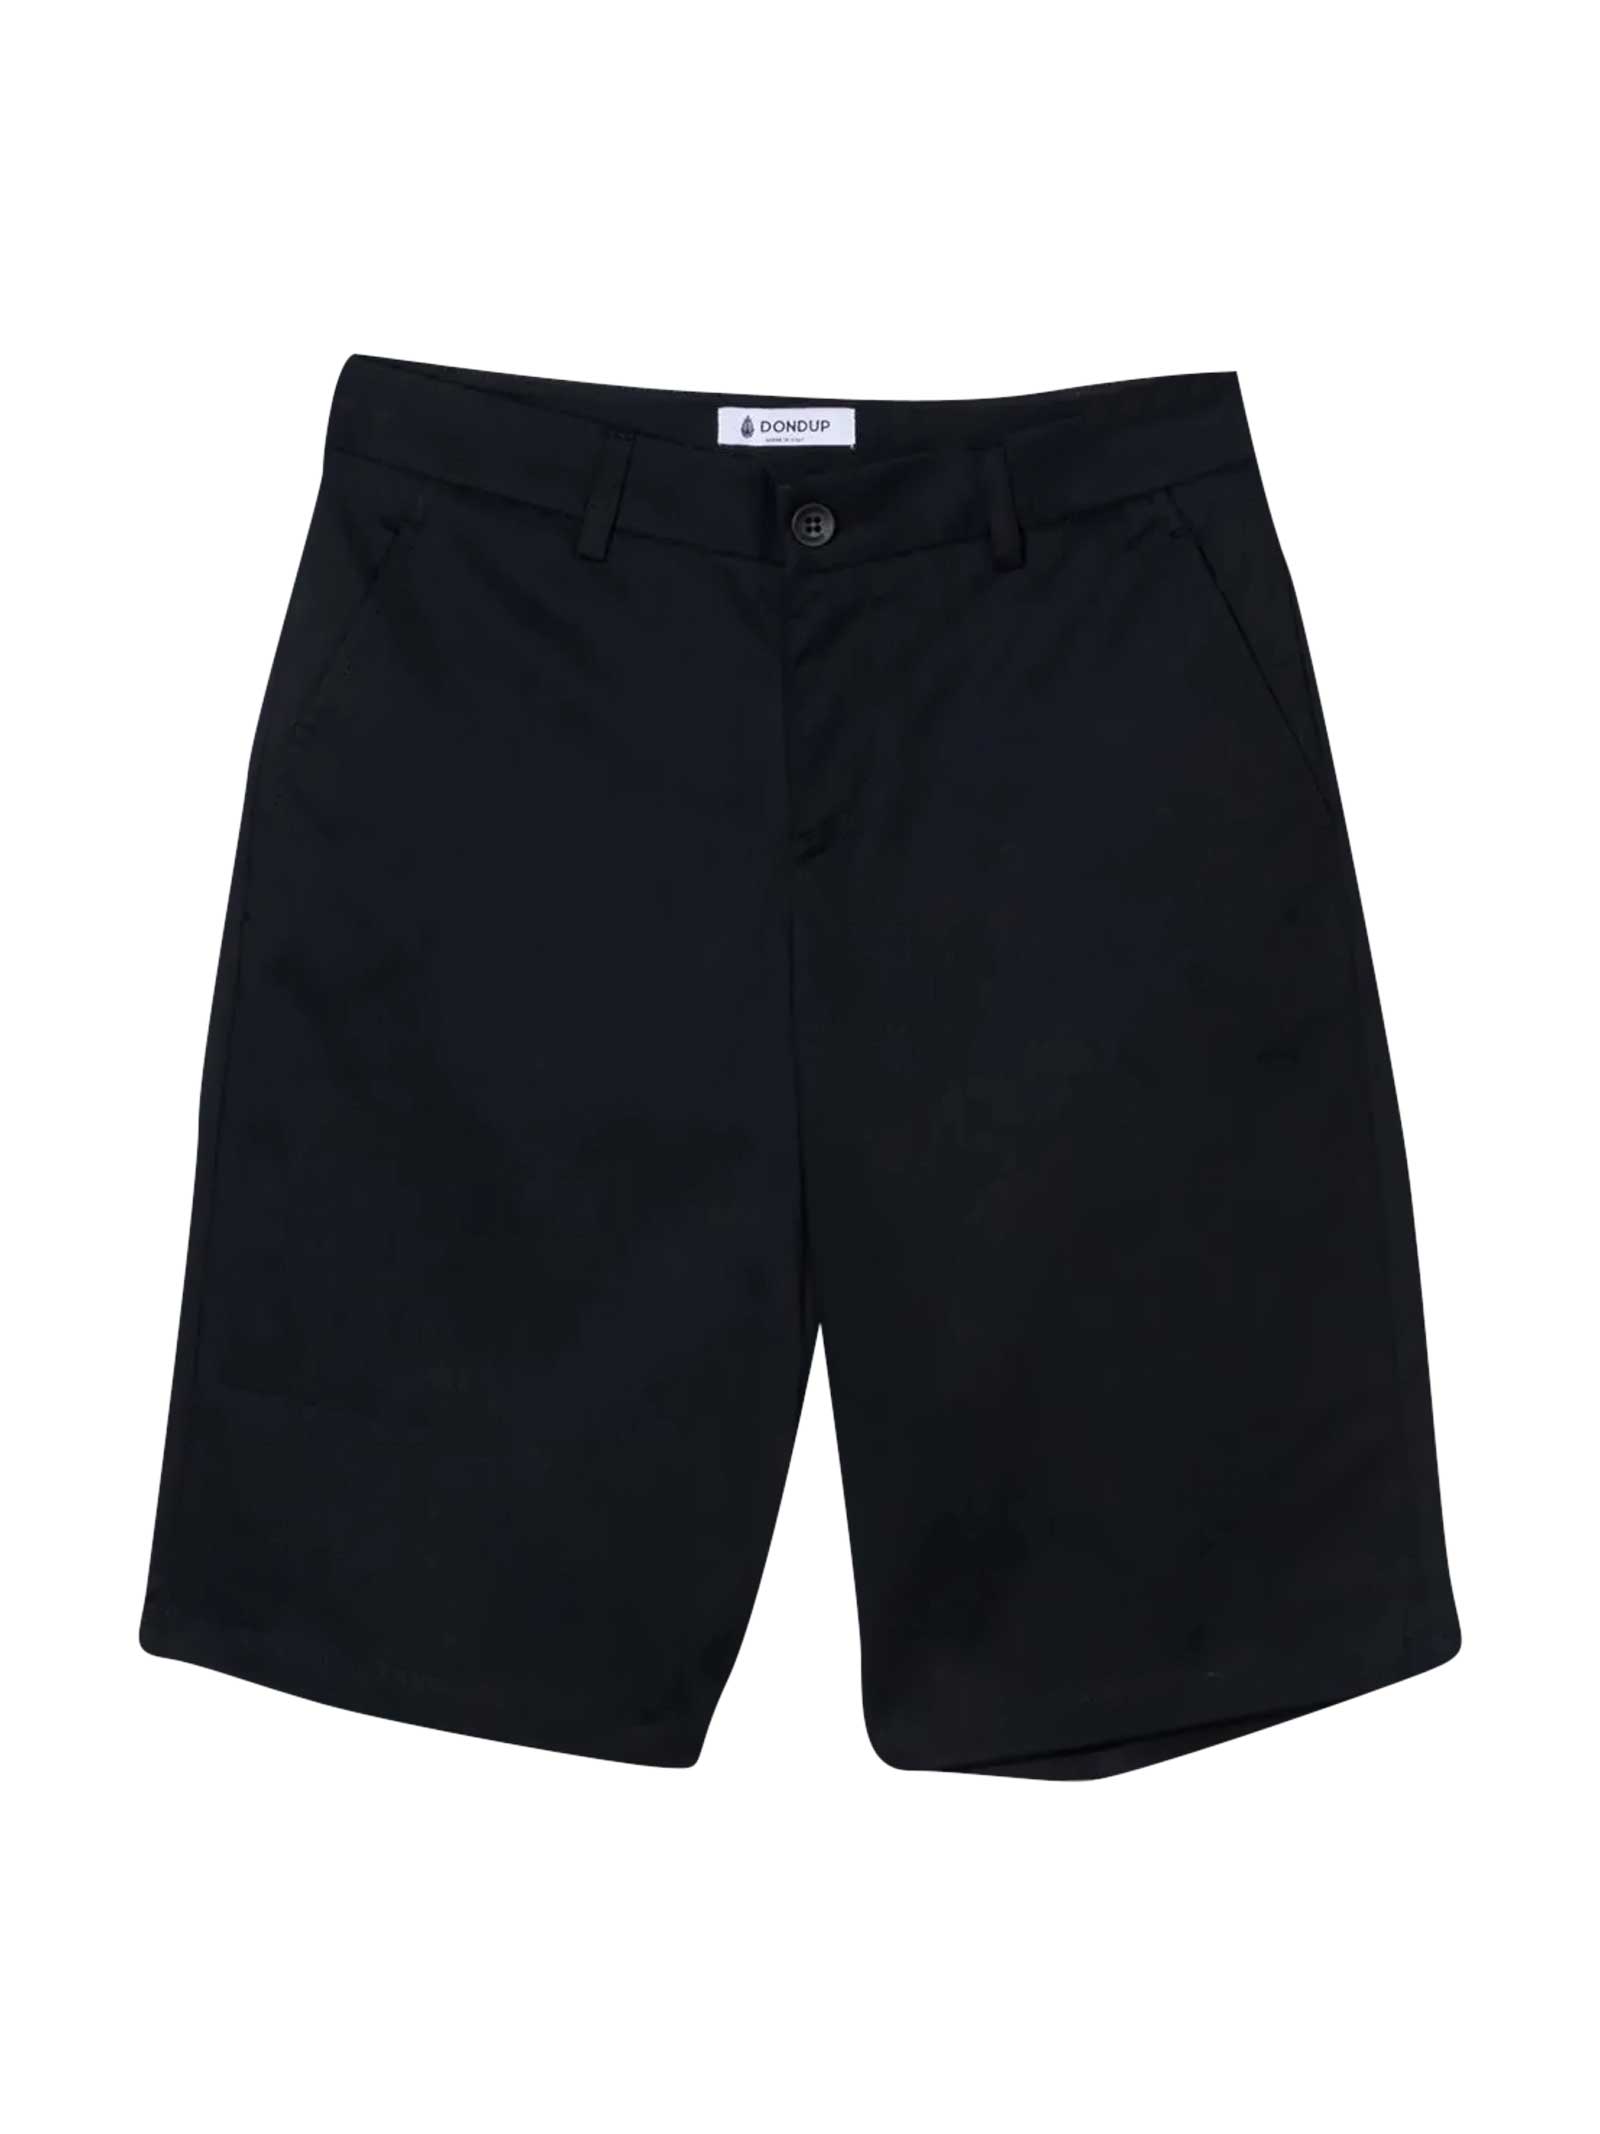 Dondup Black Shorts